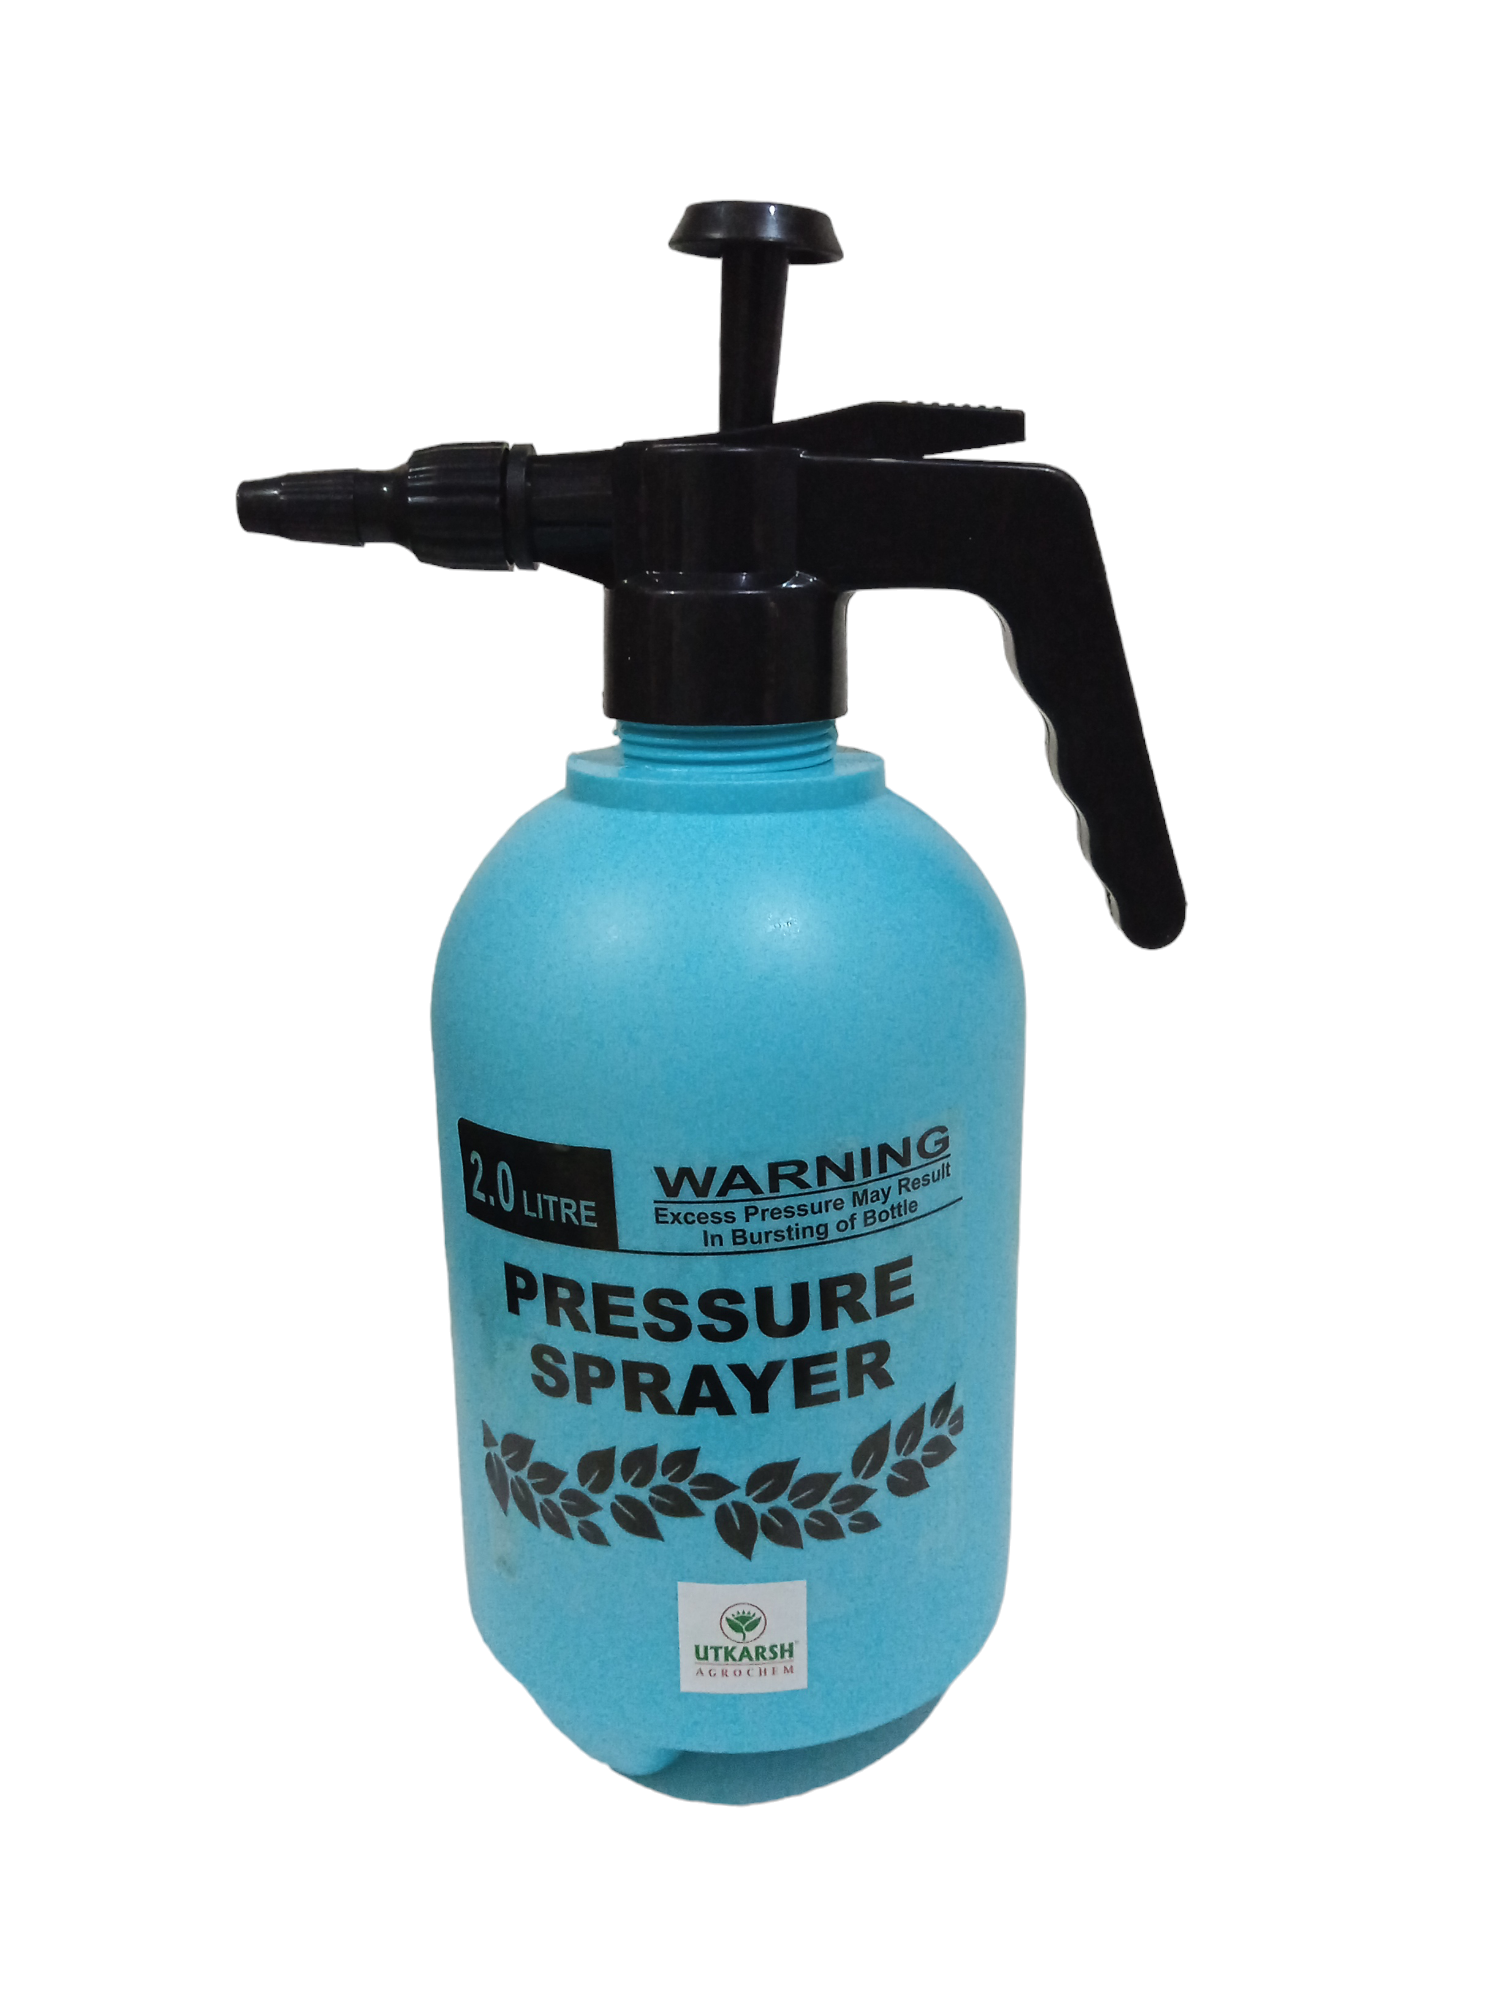 Utkarsh Garden Bottle Sprayer Blue - 2 Liter | Plant Spray Bottle for Herbicides, Pesticides, Fertilizers,| Gardening Water Pump Sprayer | Plant Spray Bottle for Garden | Spray Bottles for Gardening